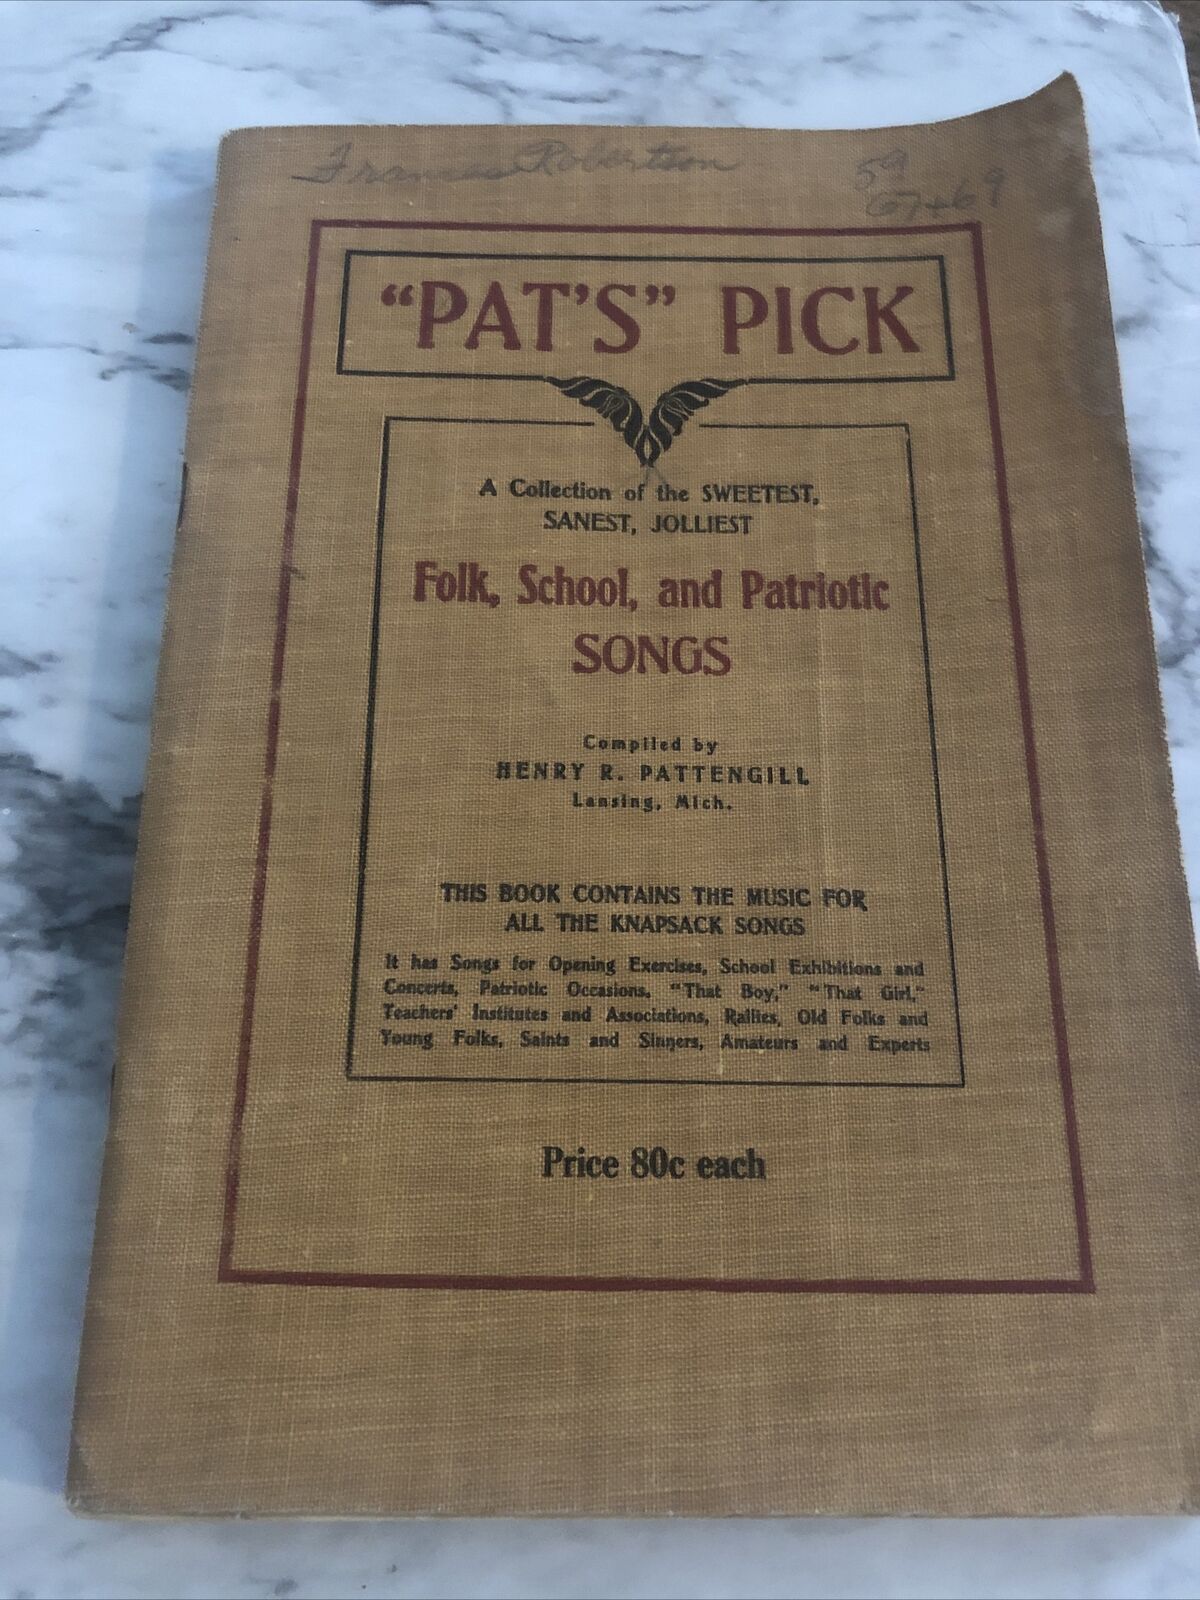 Antique 1905 Pat’s Pick song book - Folk, School, And Patriotic Henry Pattengill